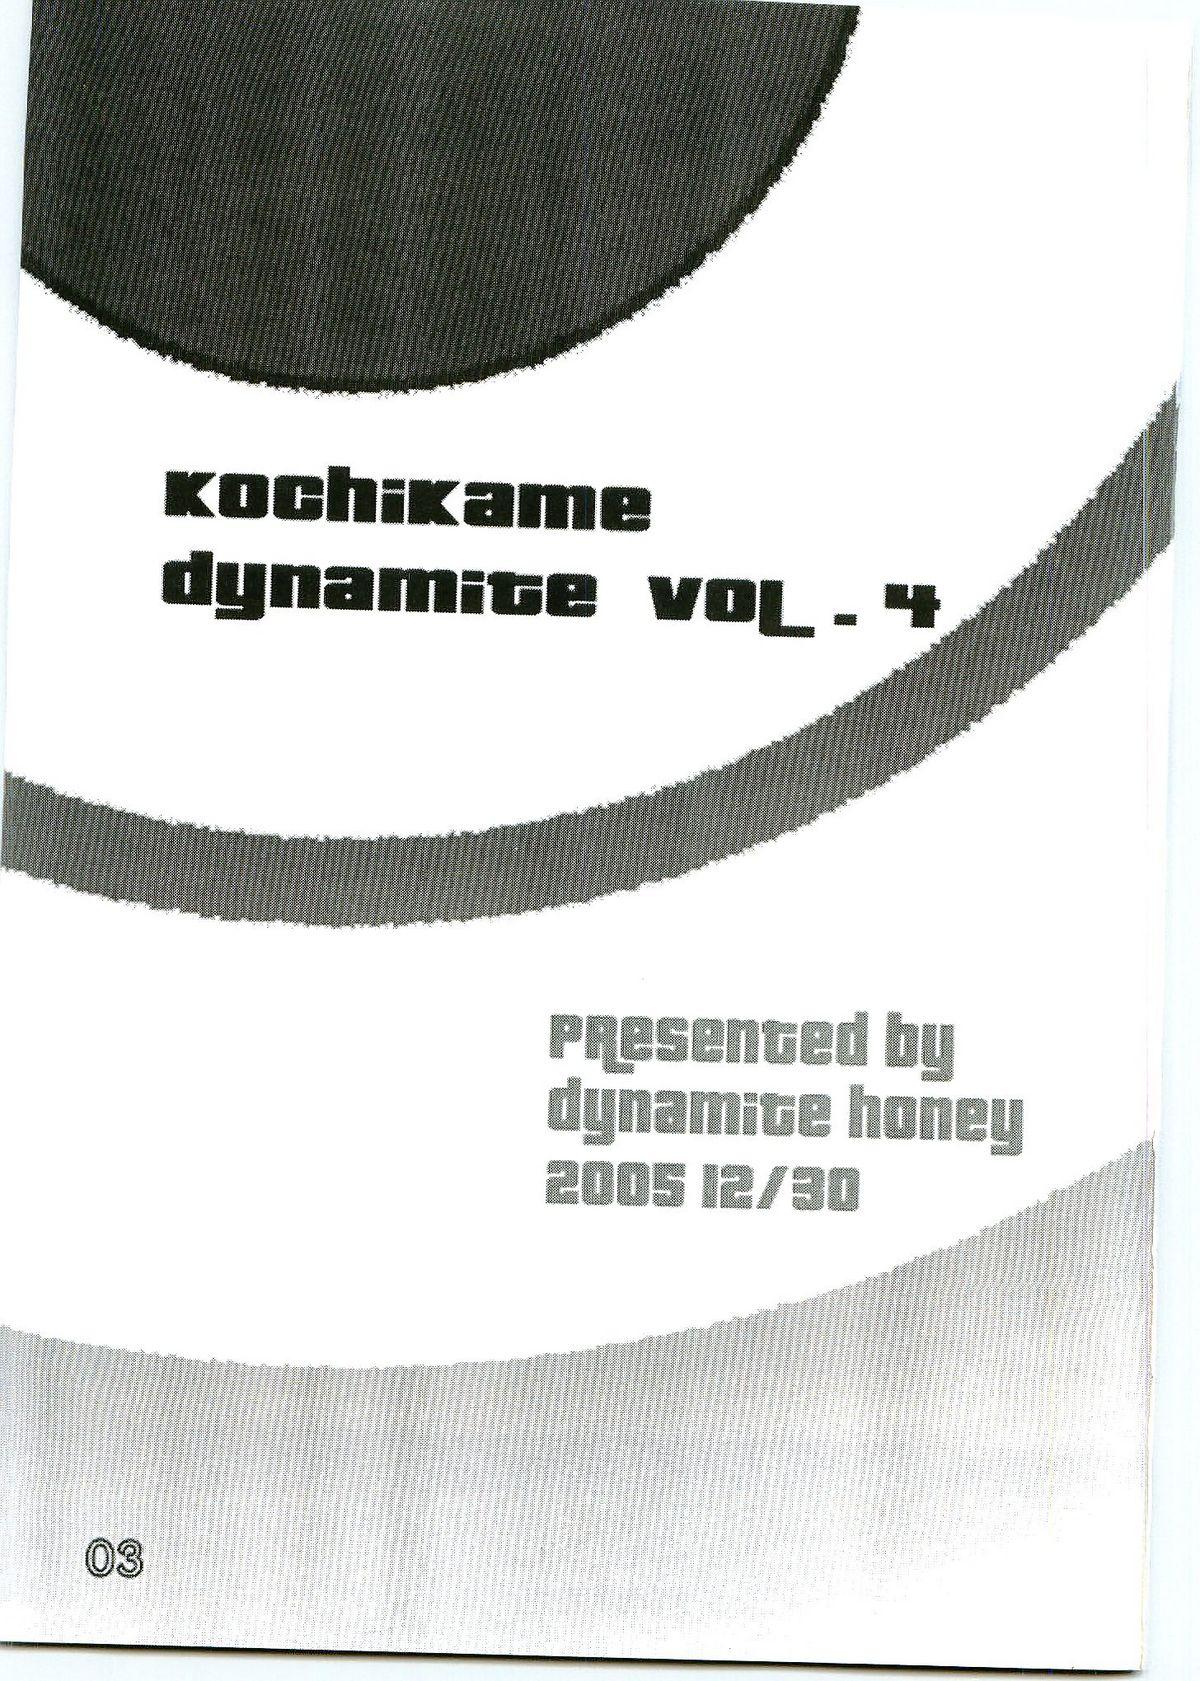 Kochikame Dynamite Vol. 4 1